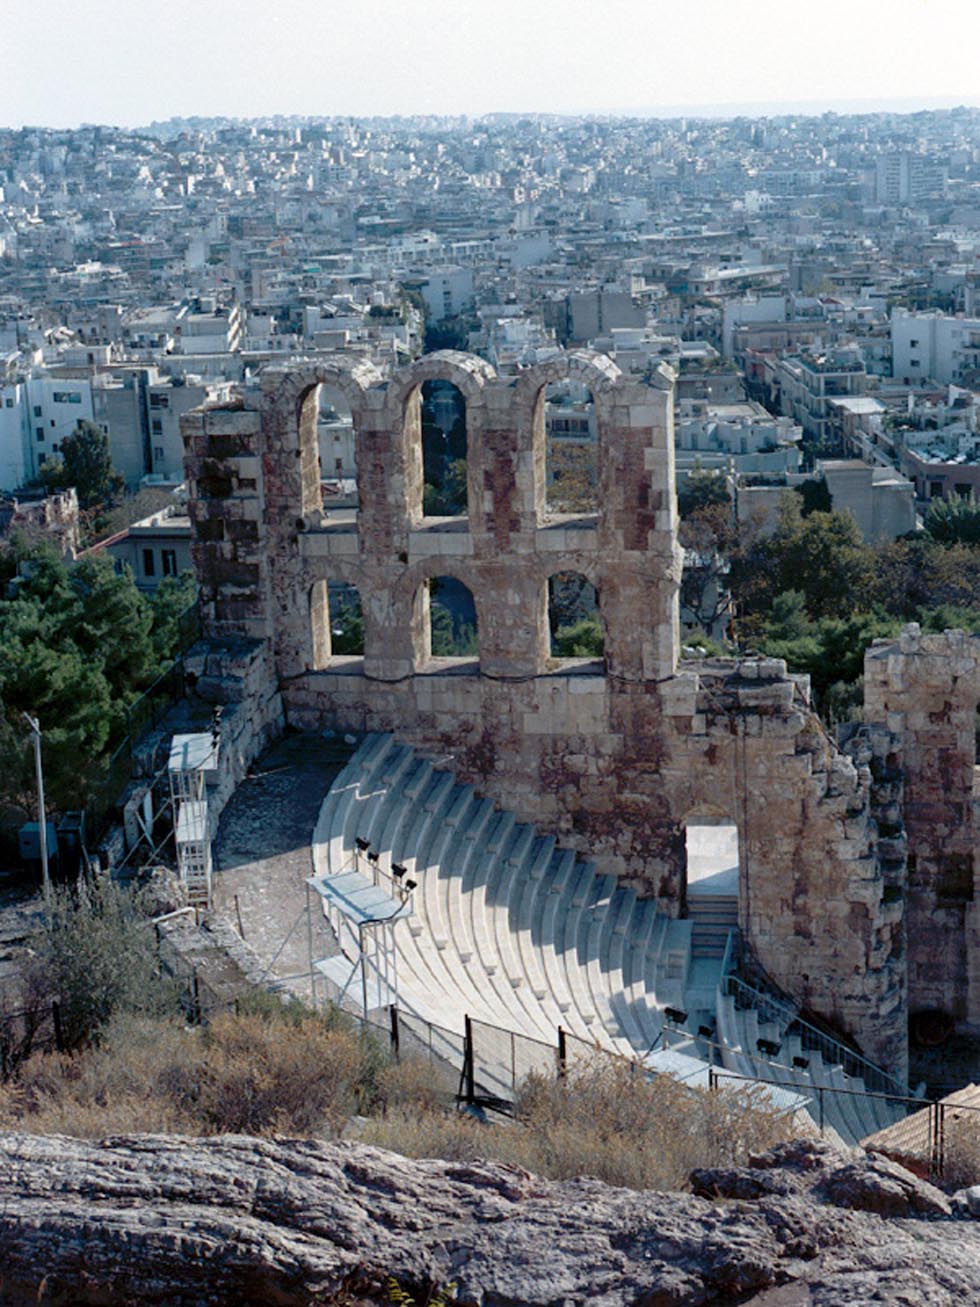 Amphiateatre of Odeon Herodes in Atticus, Greece